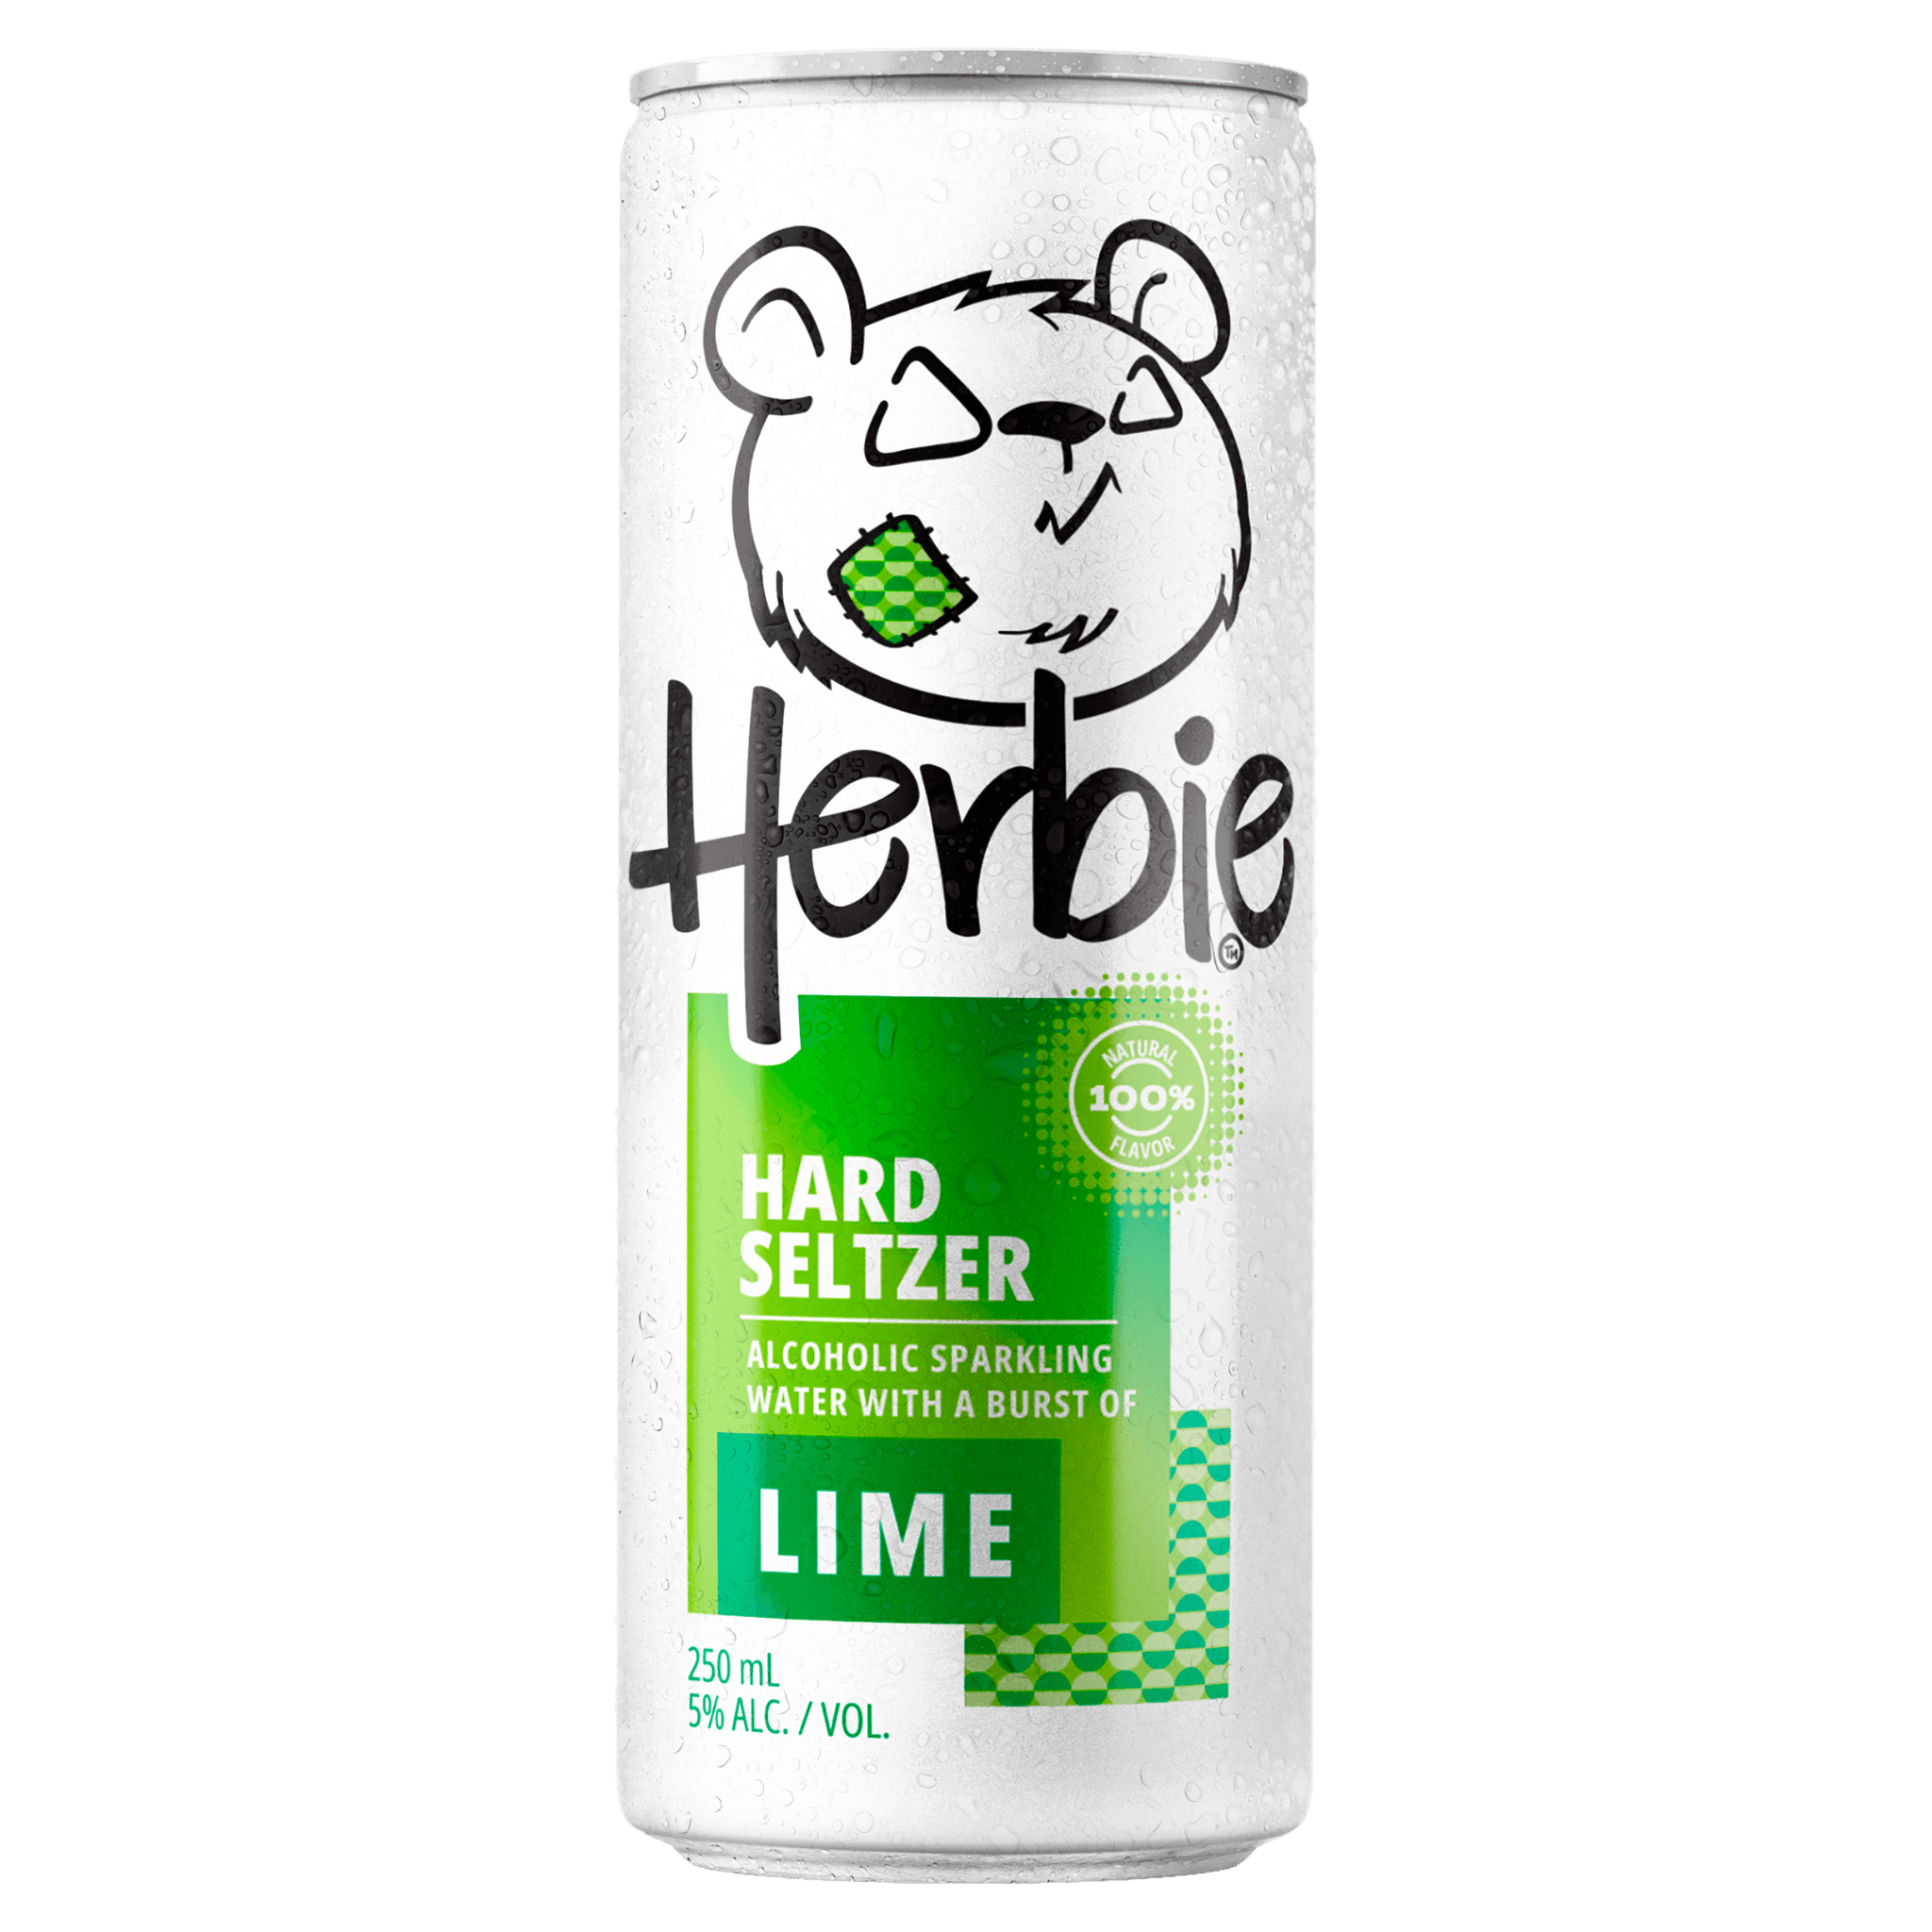 Herbie Hard Seltzer Lime 250ml at ₱139.00